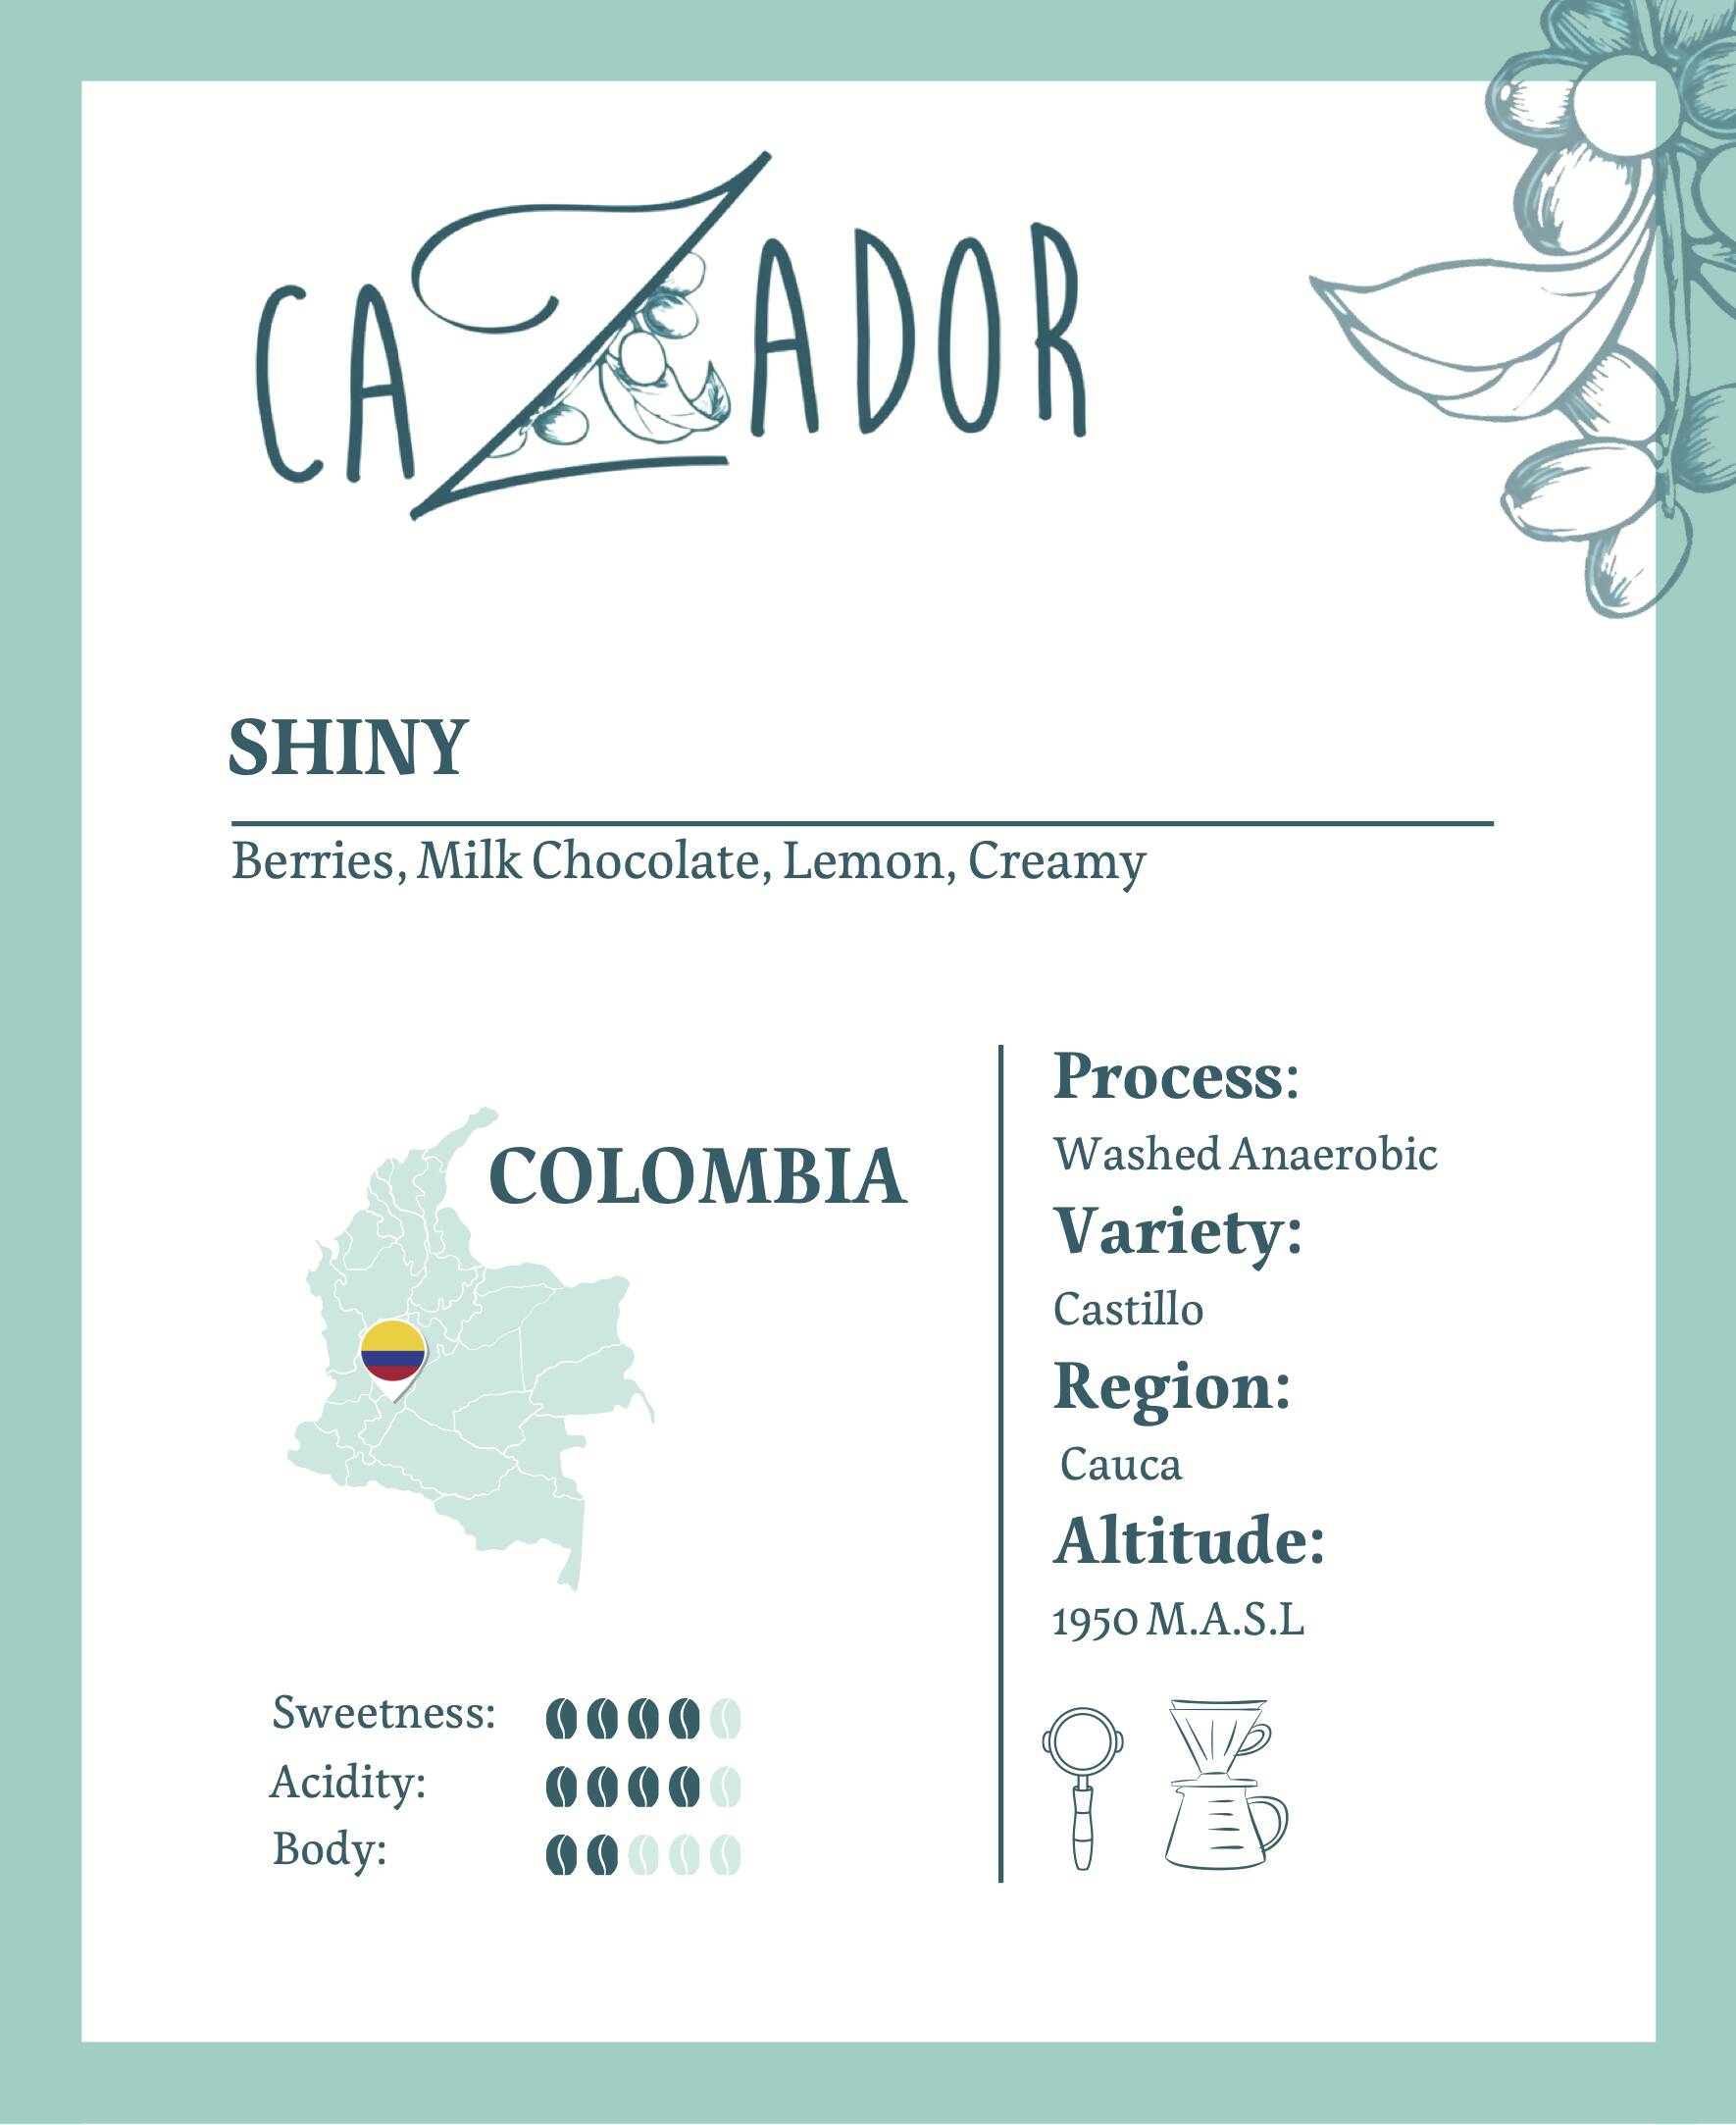 Colombia Shiny Cauca - BeanBurds Cazador Roaster